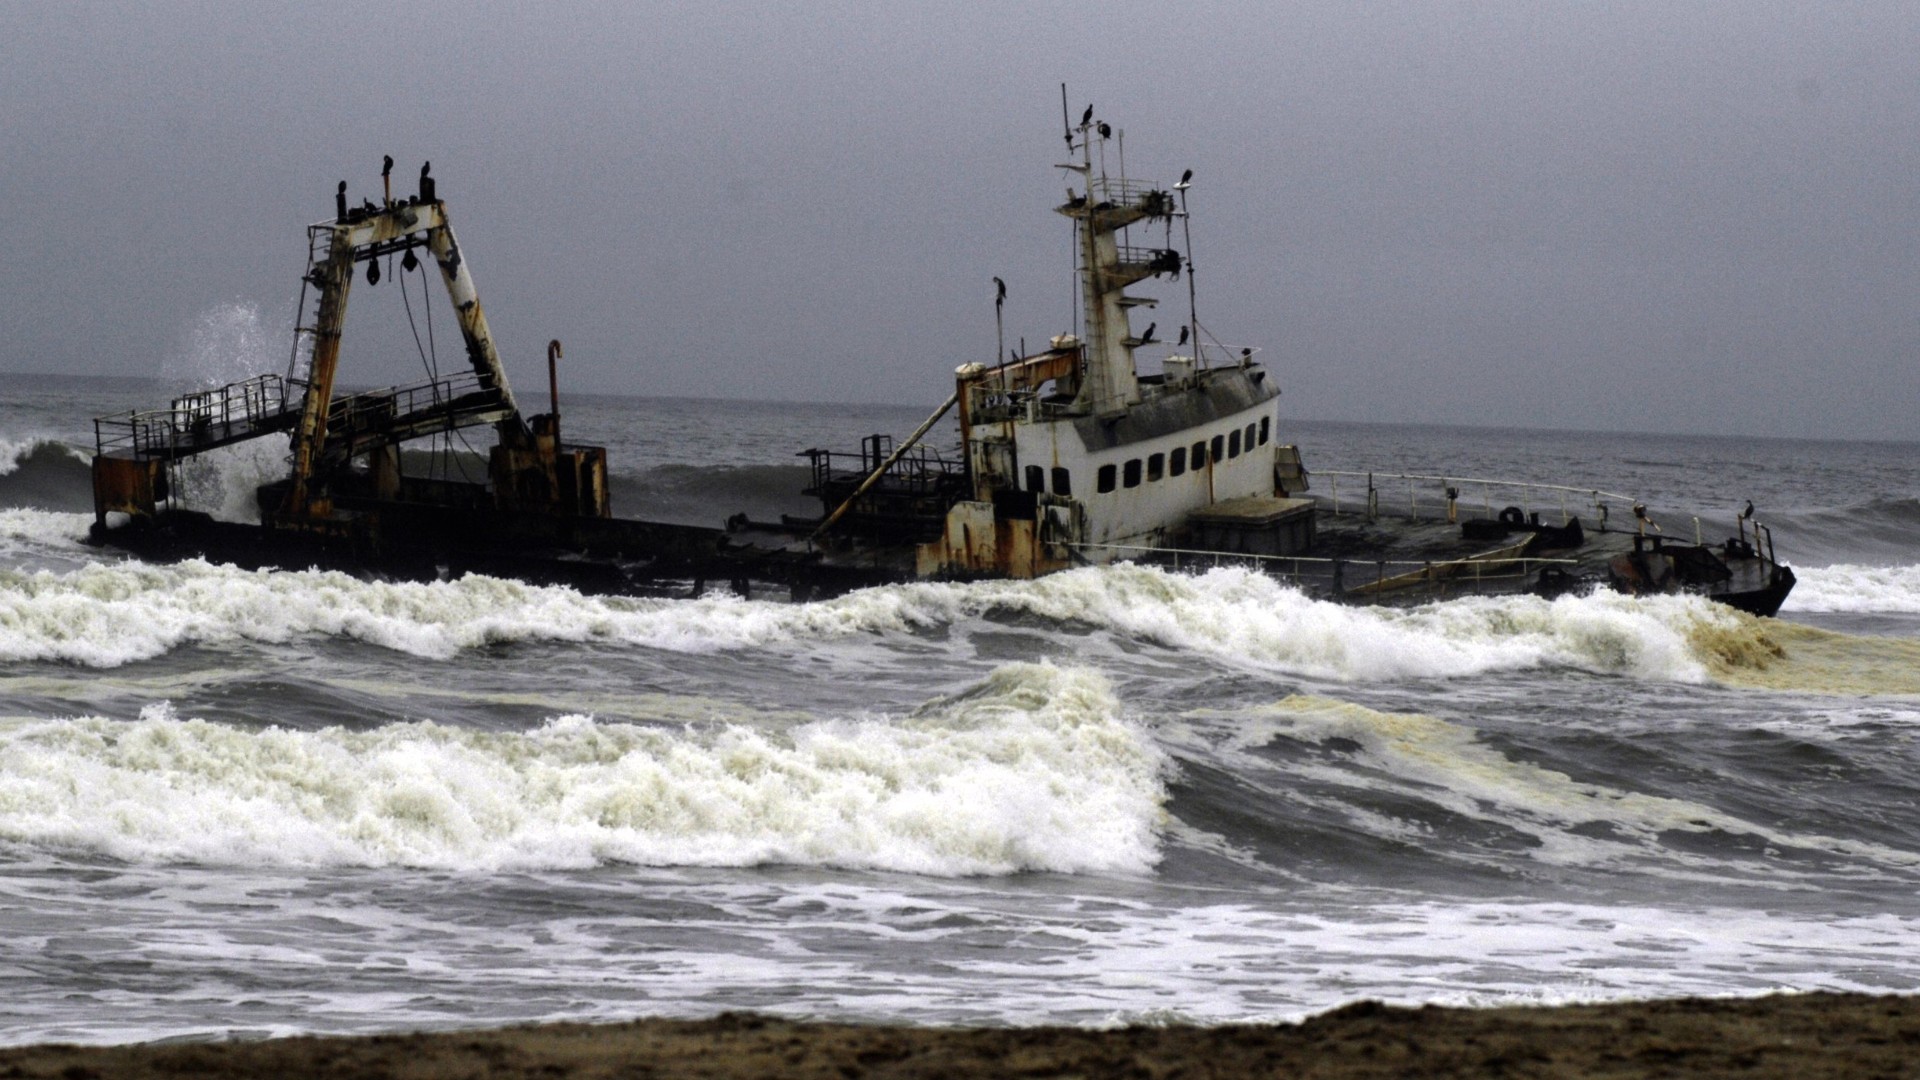 Wrecked fishing trawler